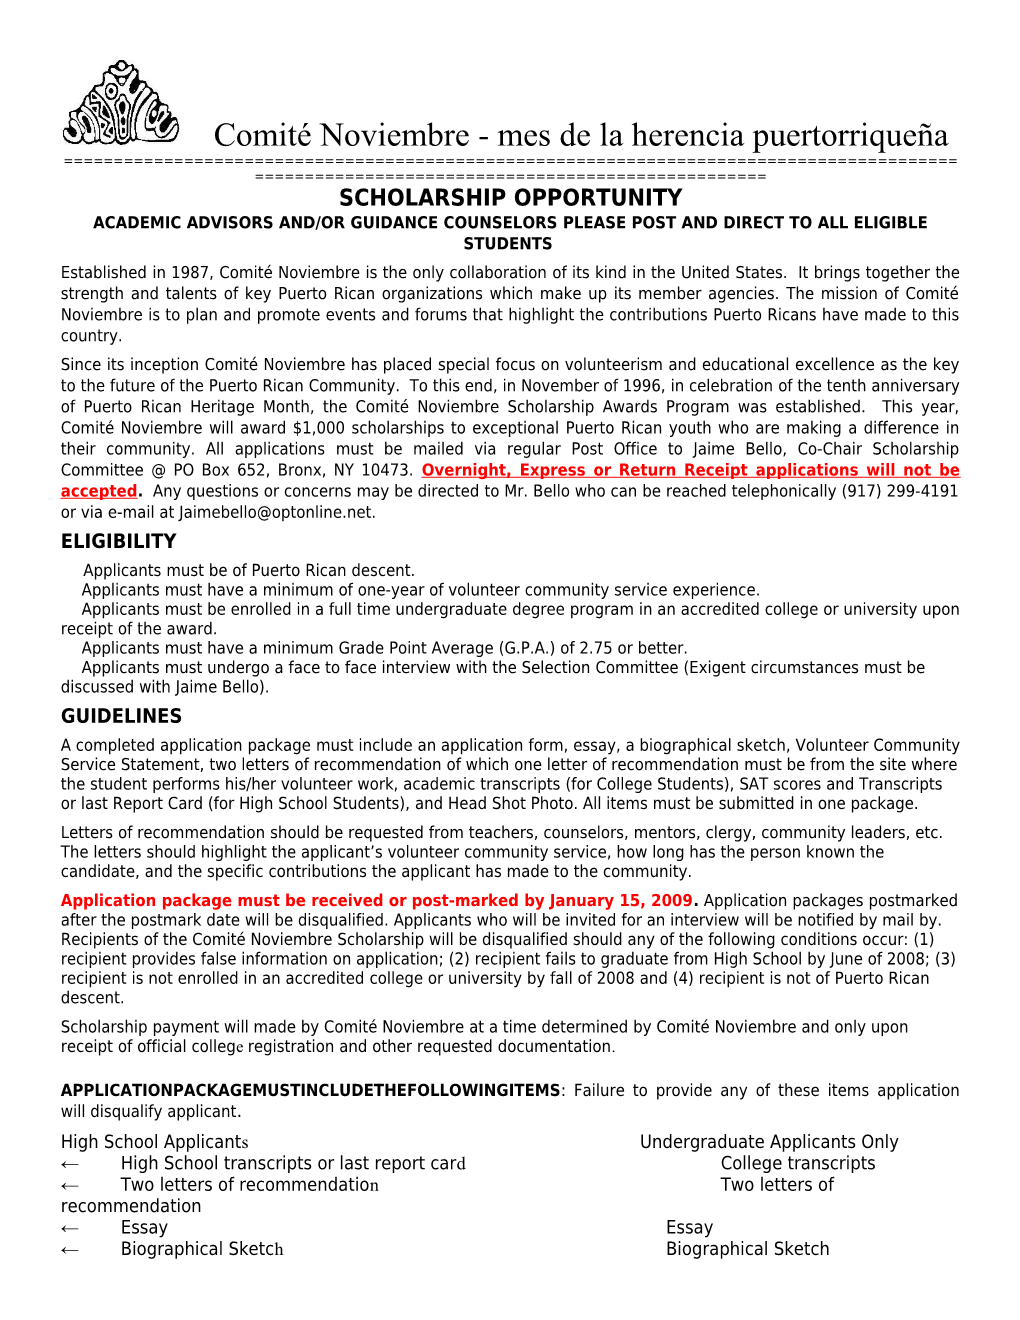 New Scholarship Application s1